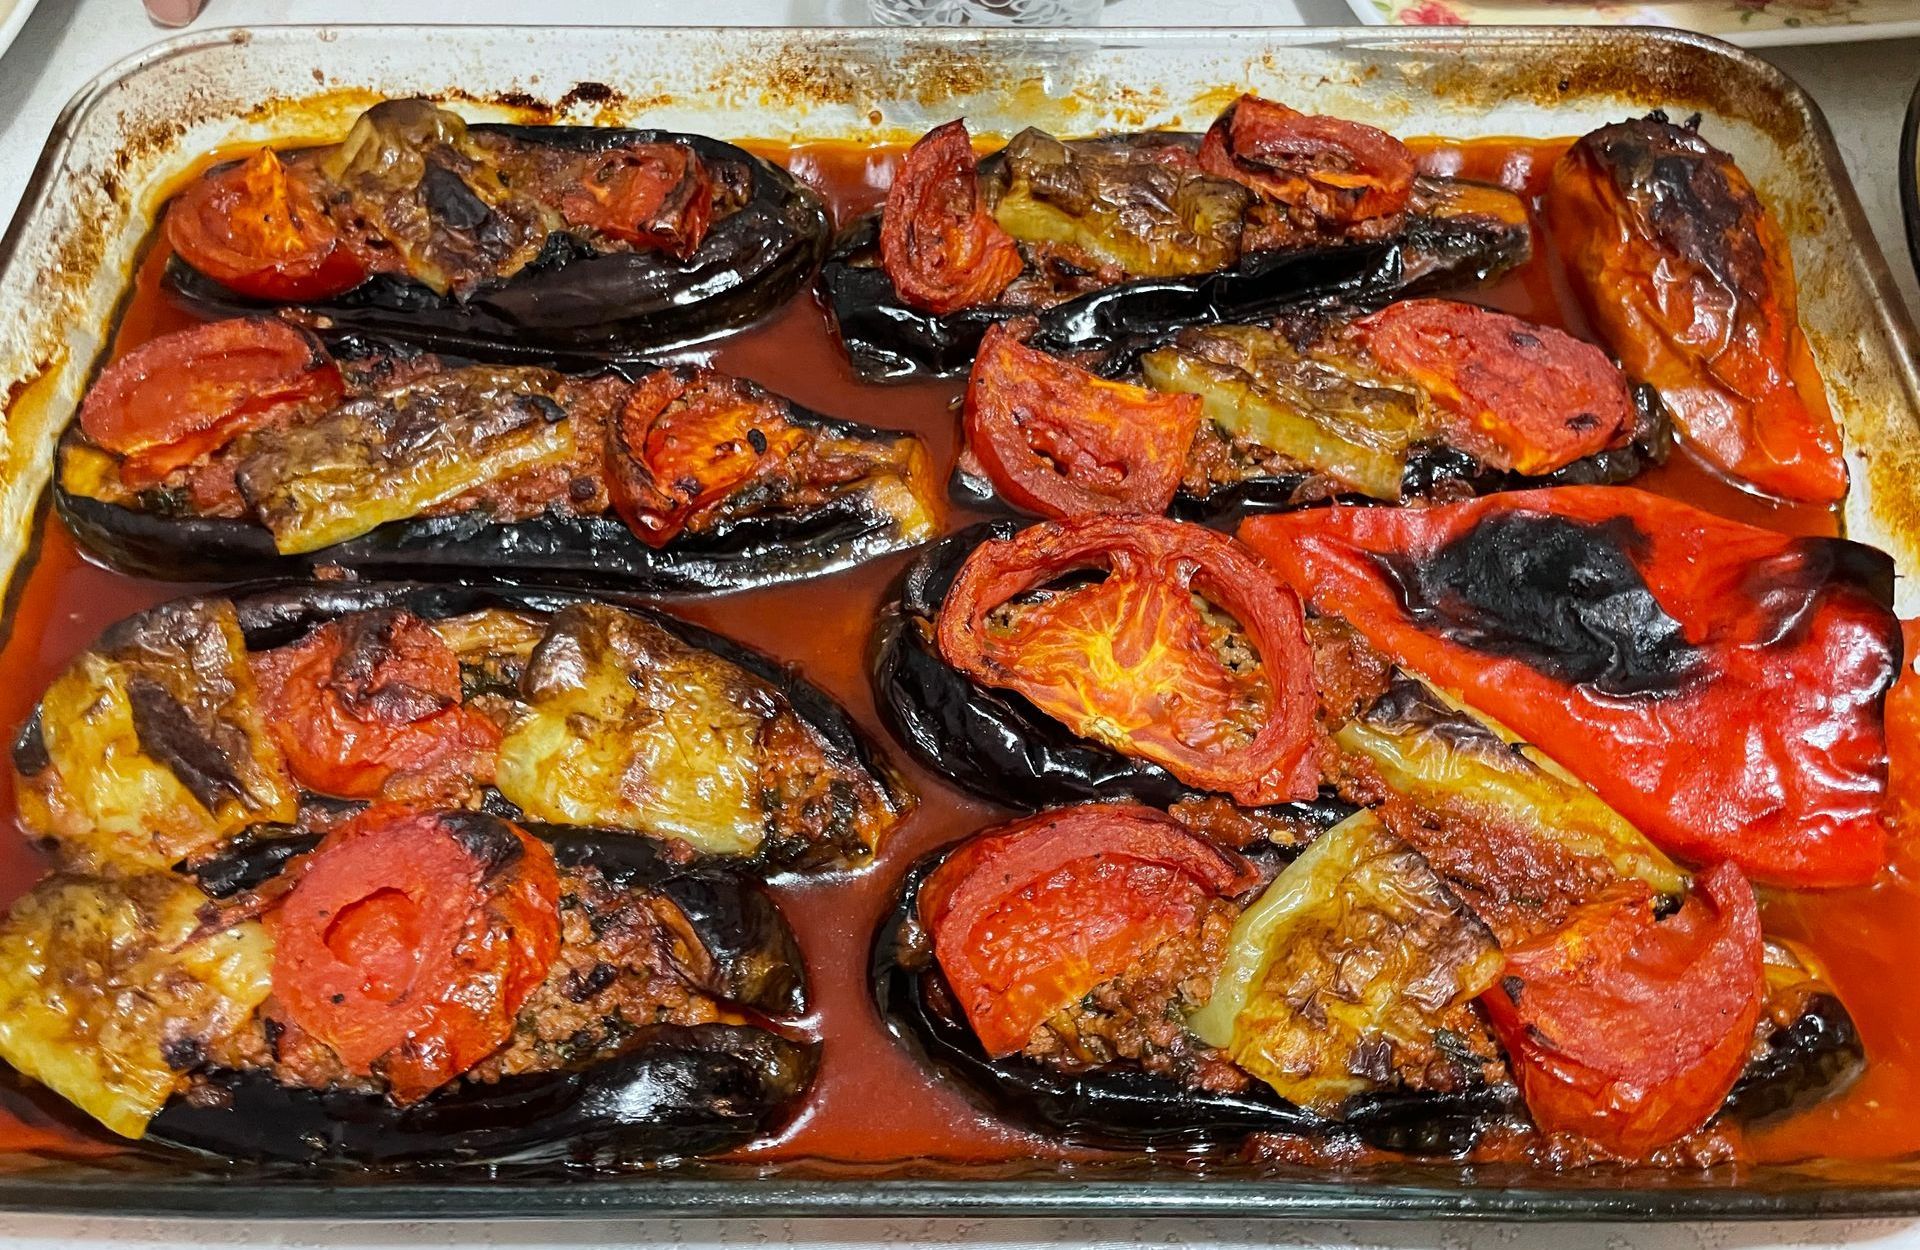 Traditional Turkish Eggplants Dishes - Turkish Karniyarik filled with Ground Beef. 